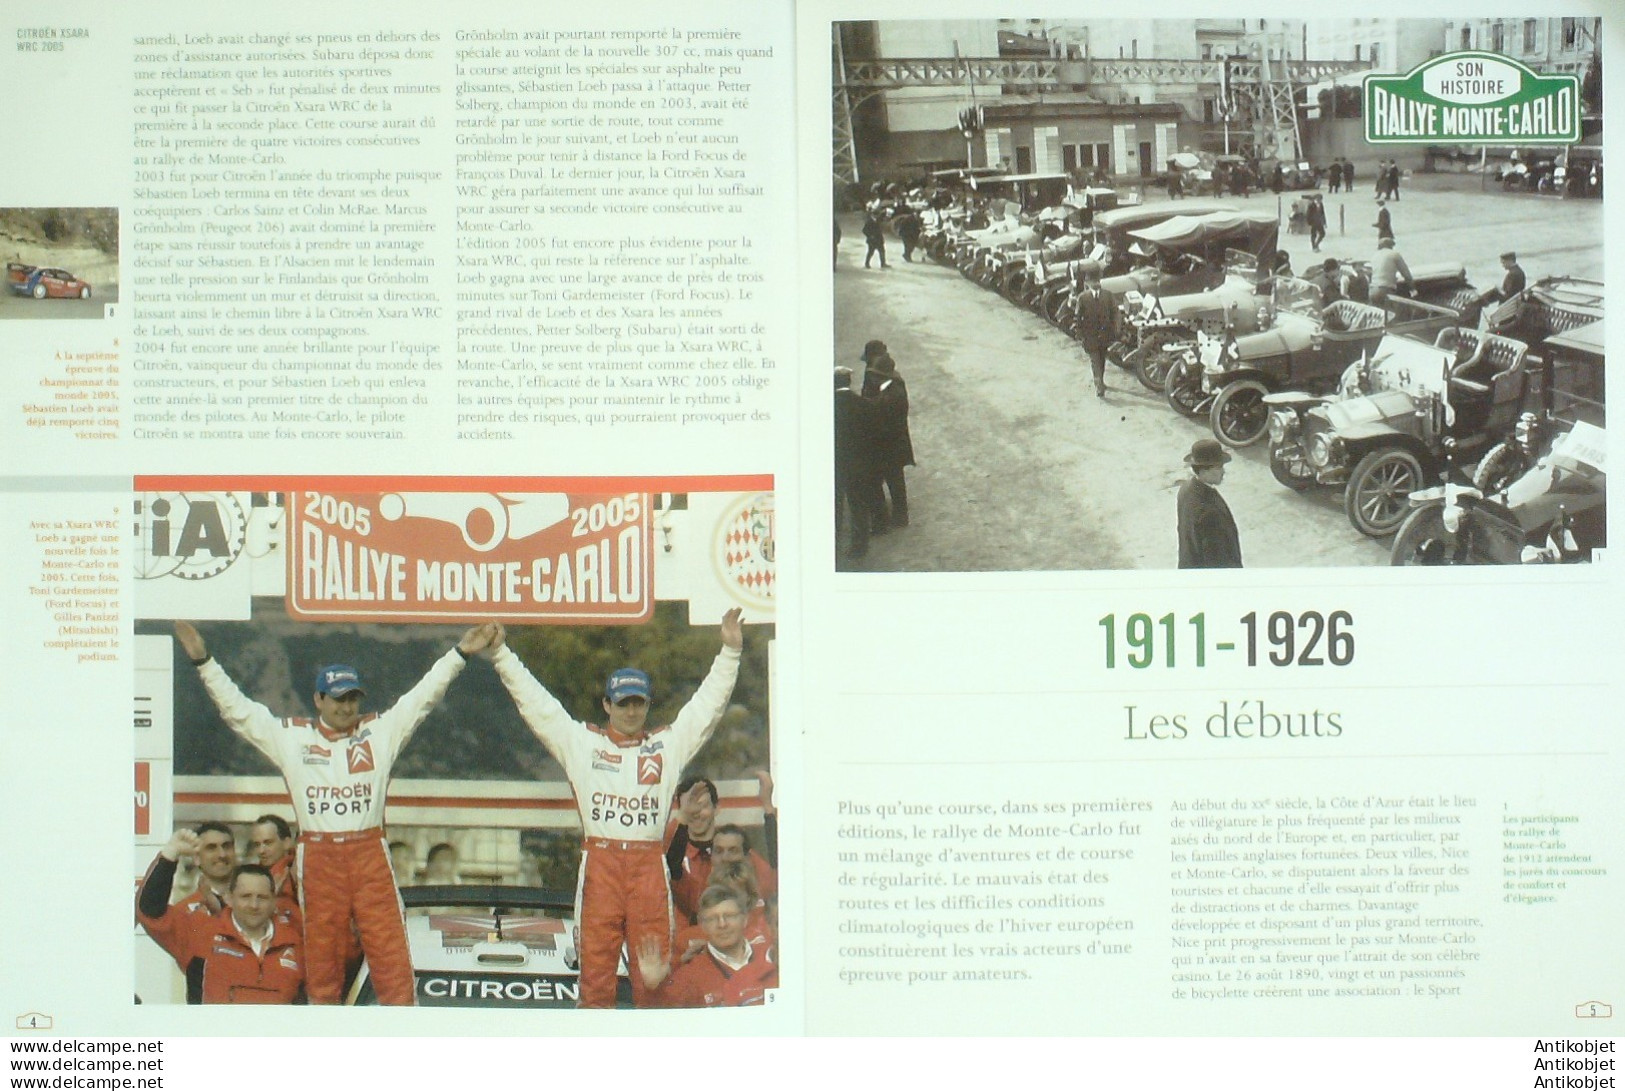 Citroen Xsara WRC Rallye Monte-Carlo édition Hachette - History